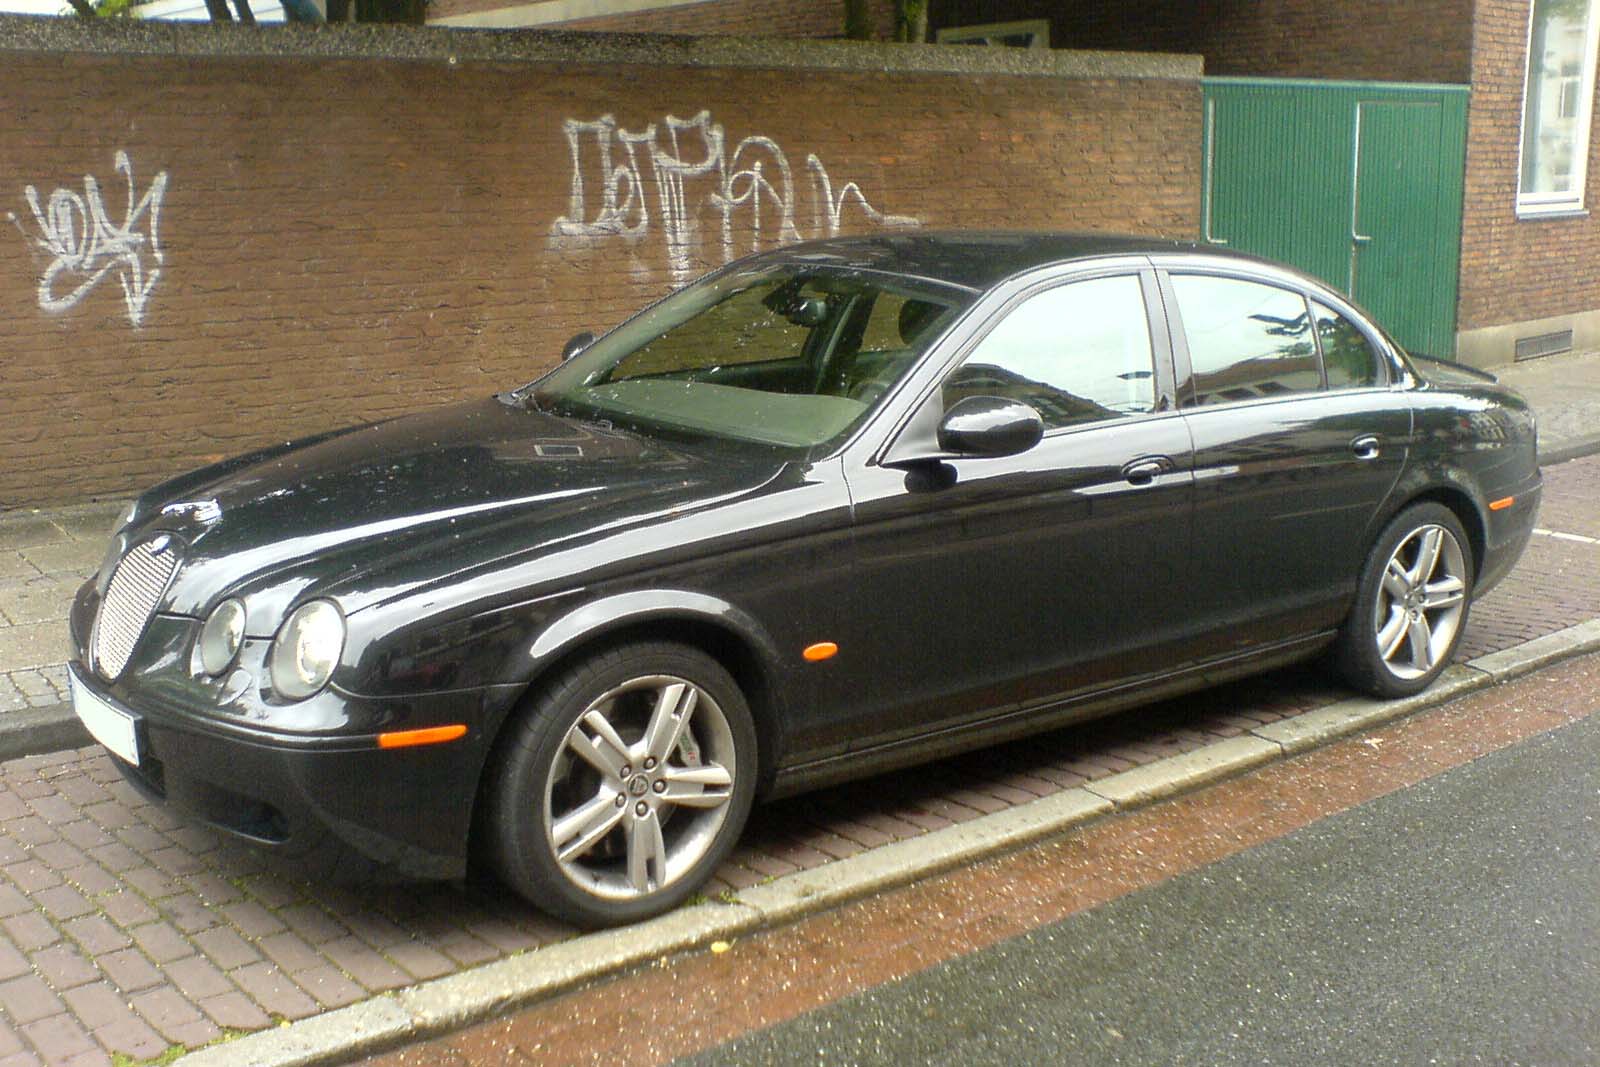 2003 Jaguar SType